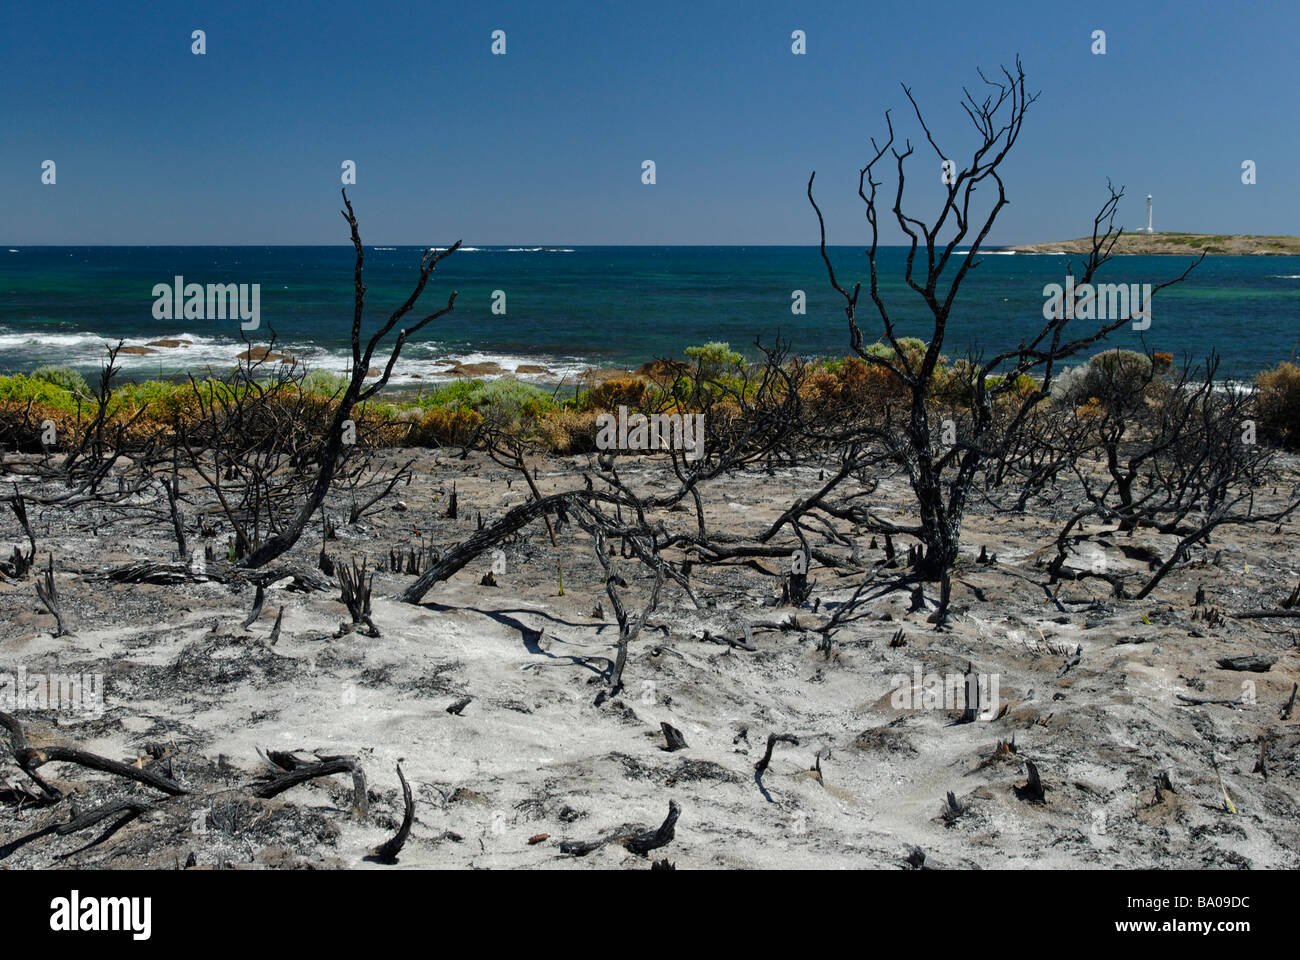 Western Australia Cape Leeuwin burnt vegetation resulting from a bush fire Stock Photo